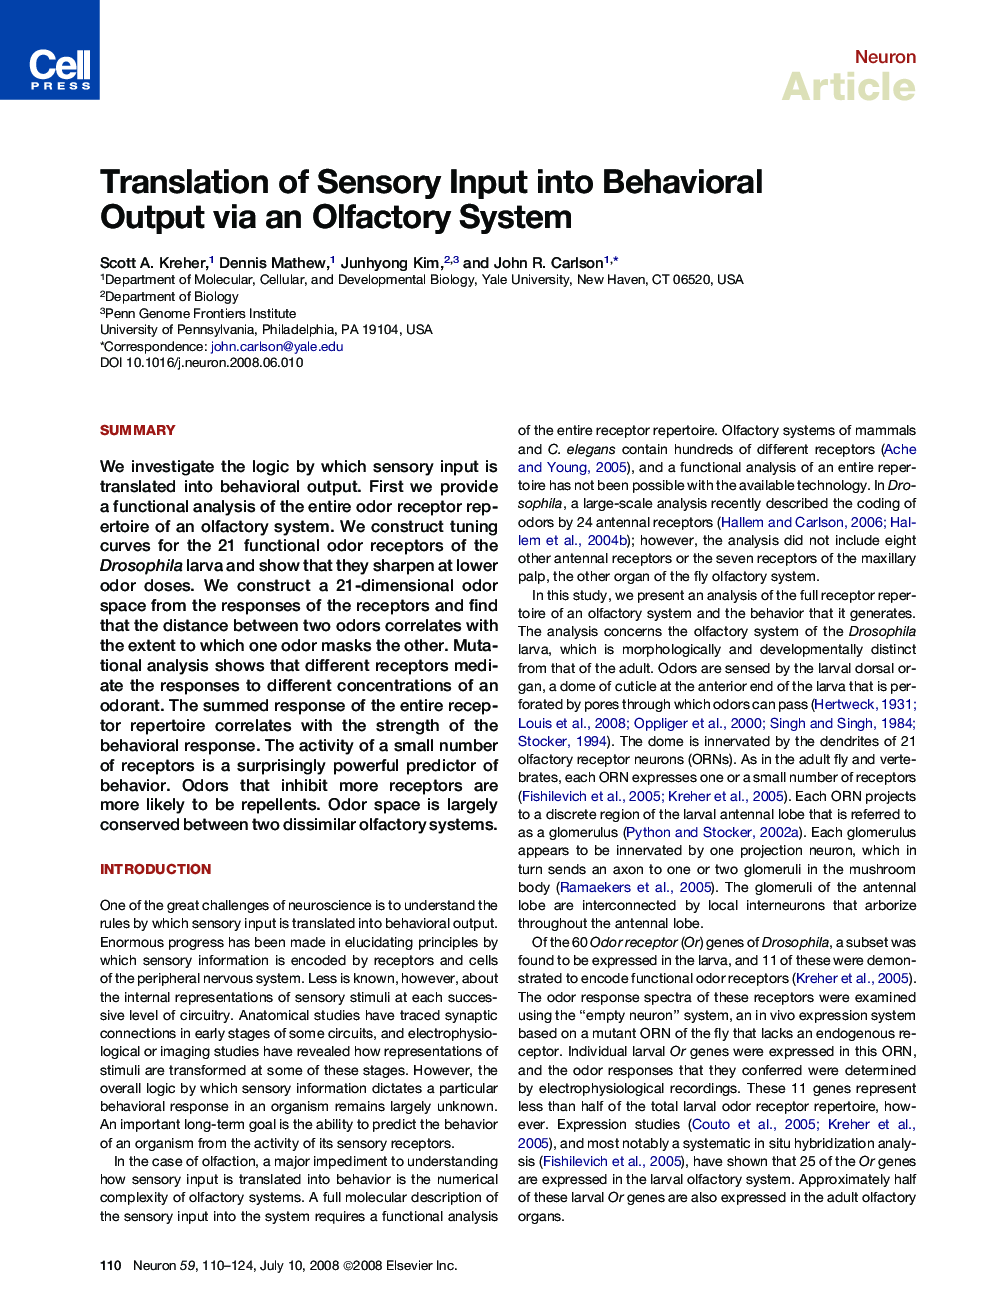 Translation of Sensory Input into Behavioral Output via an Olfactory System